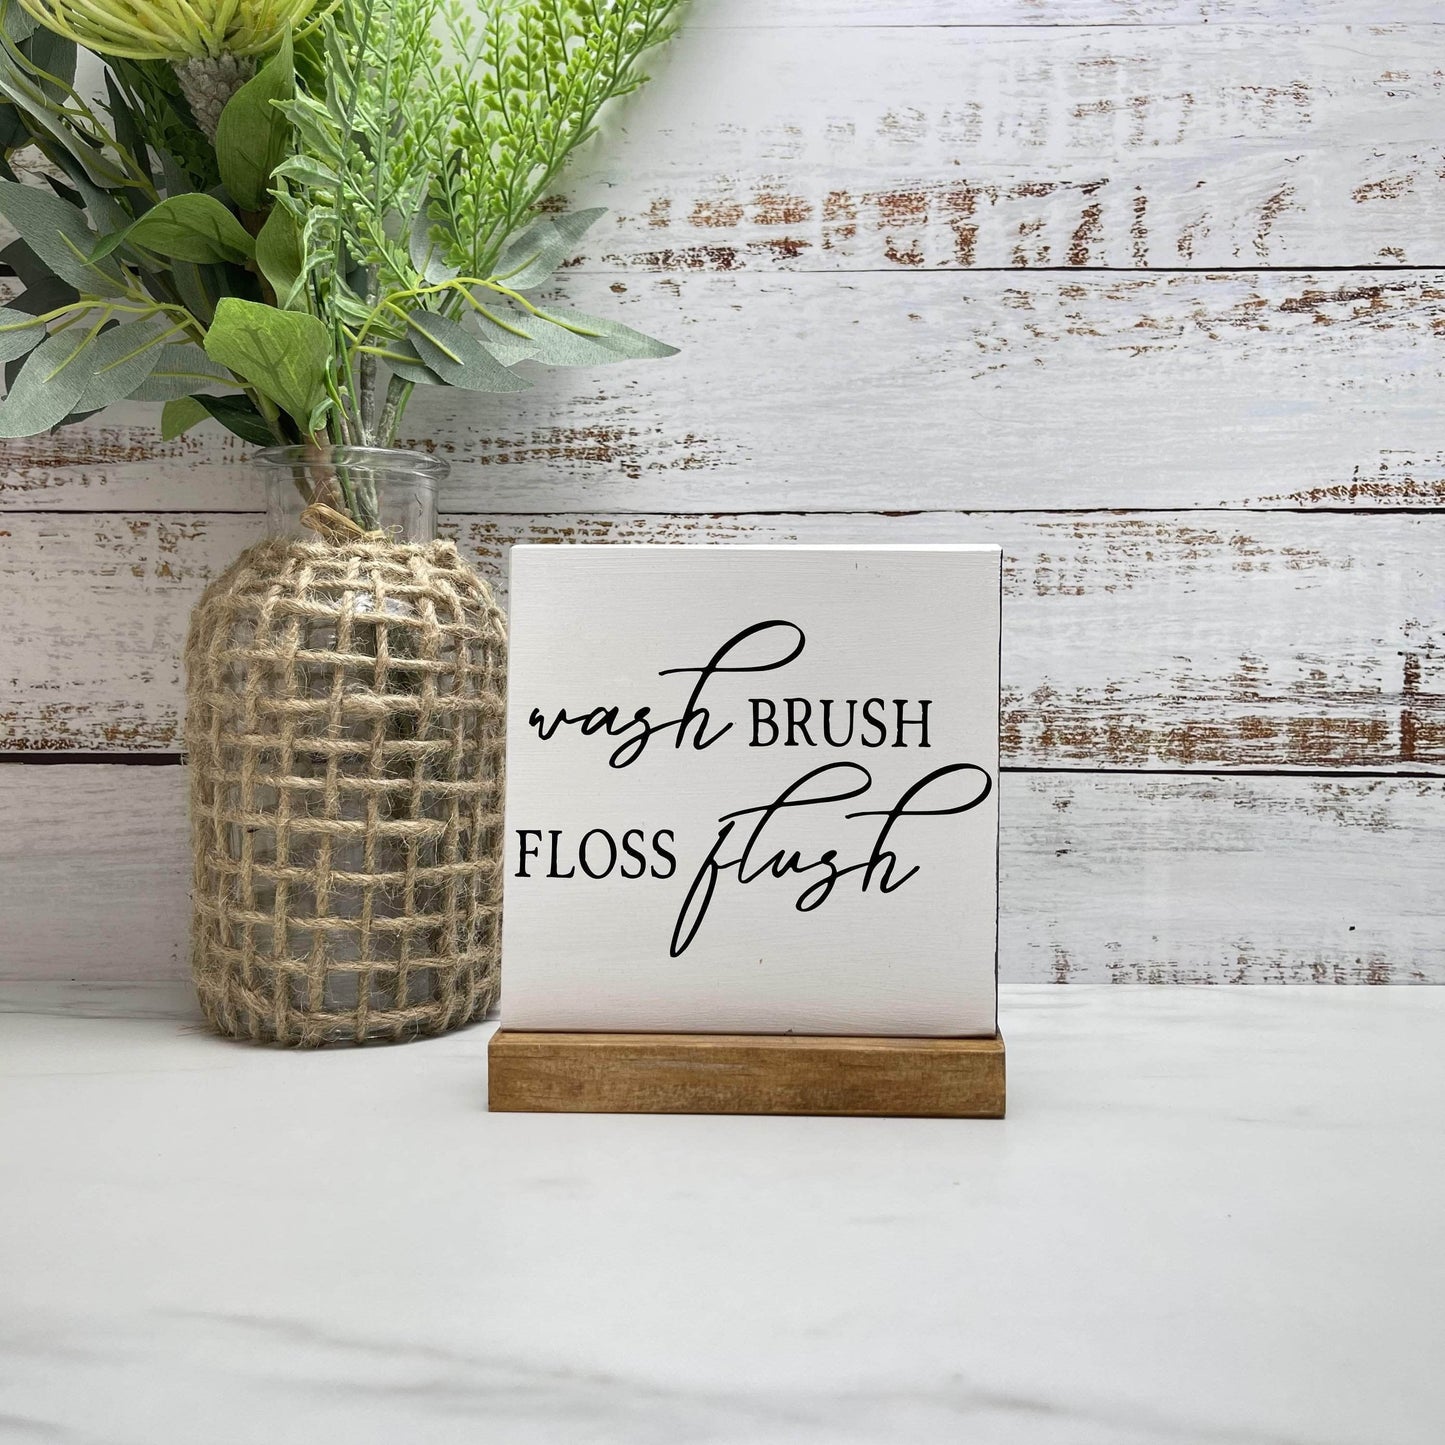 Wash brush floss flush bathroom wood sign with base decor